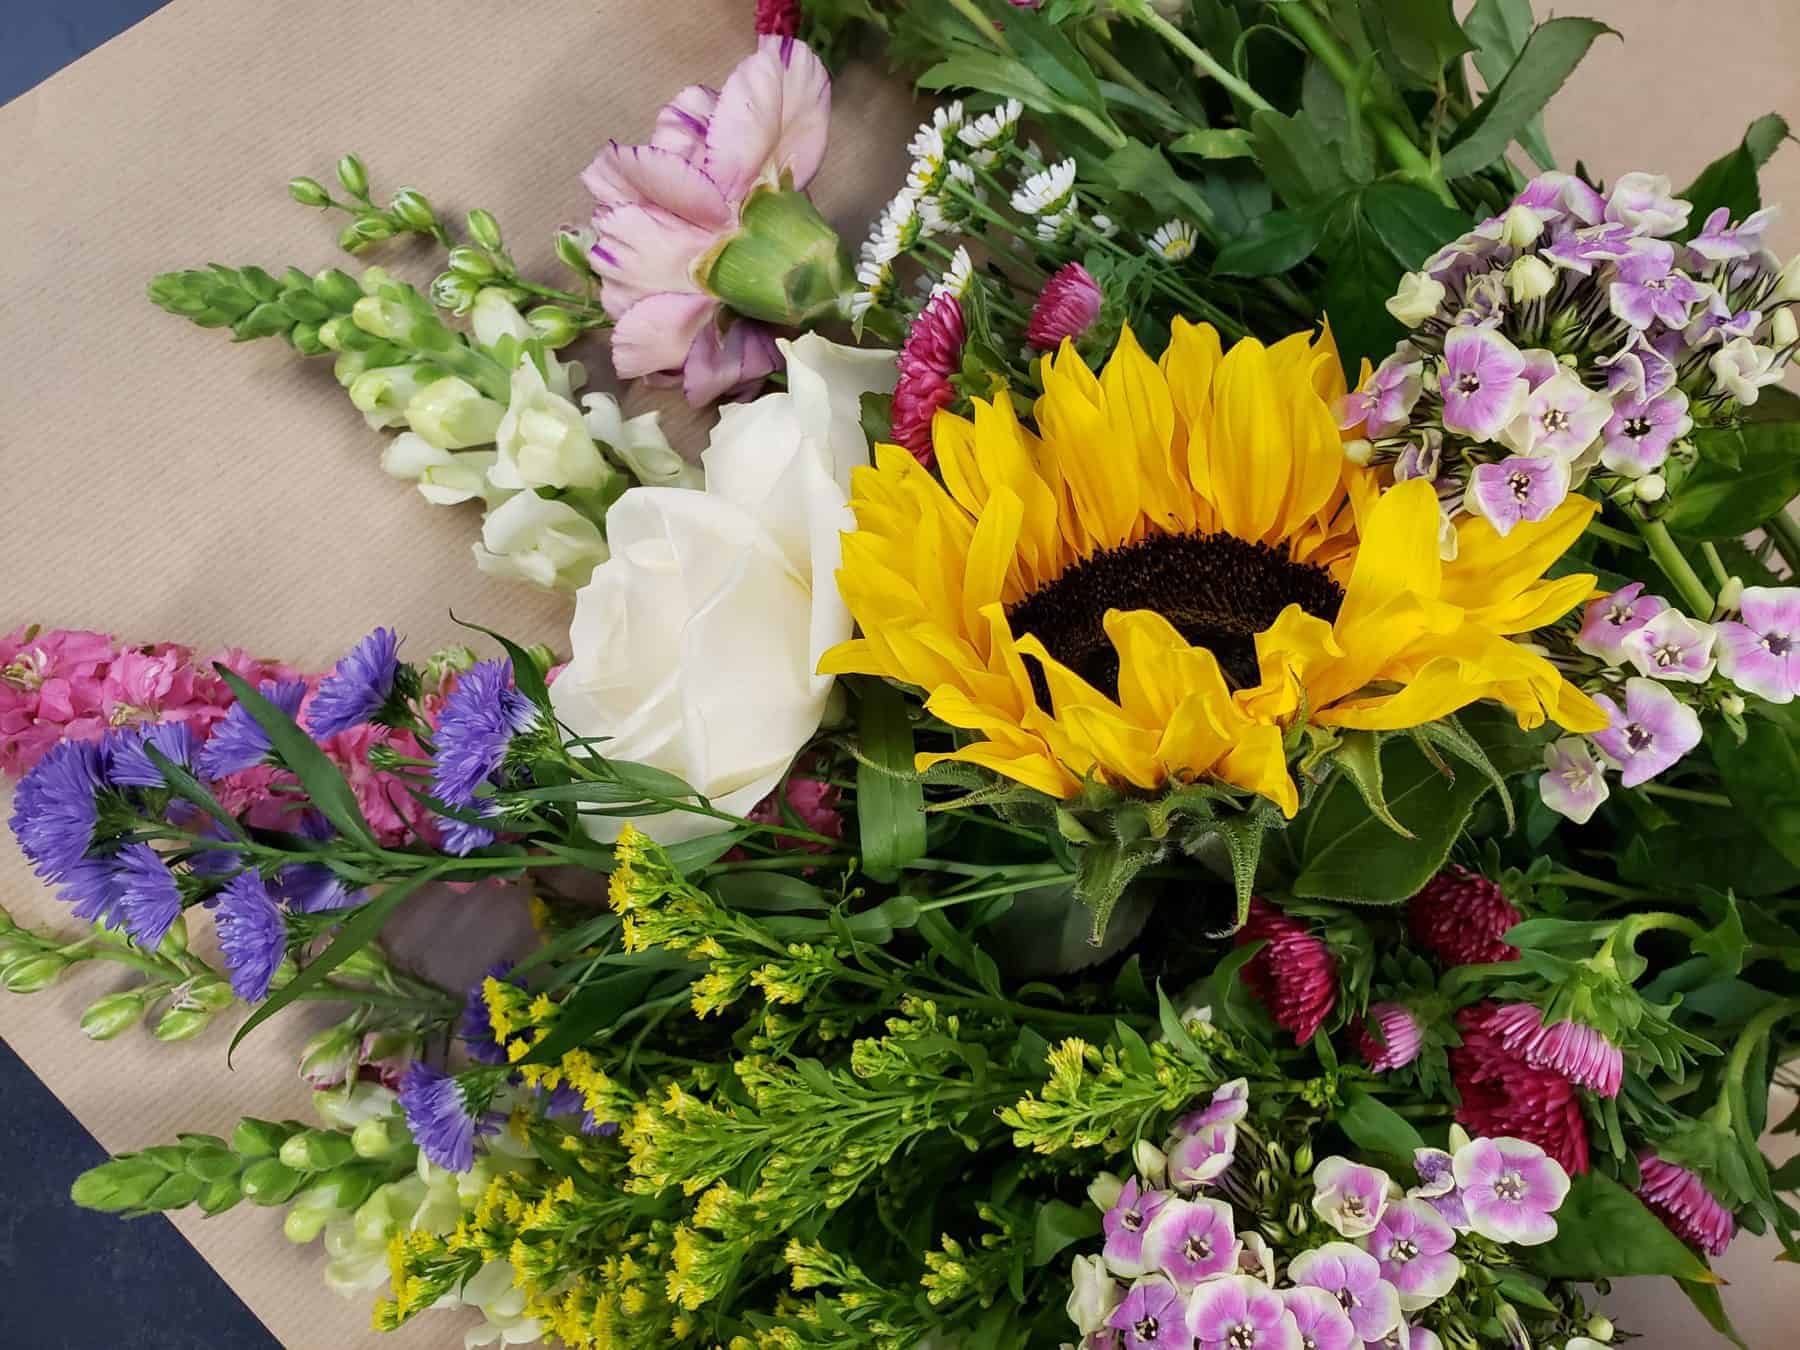 shop-gift flowers-flower delivery-torbay florist